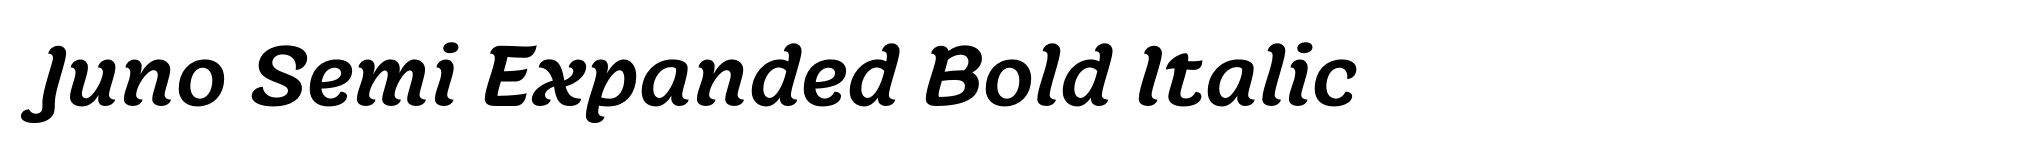 Juno Semi Expanded Bold Italic image